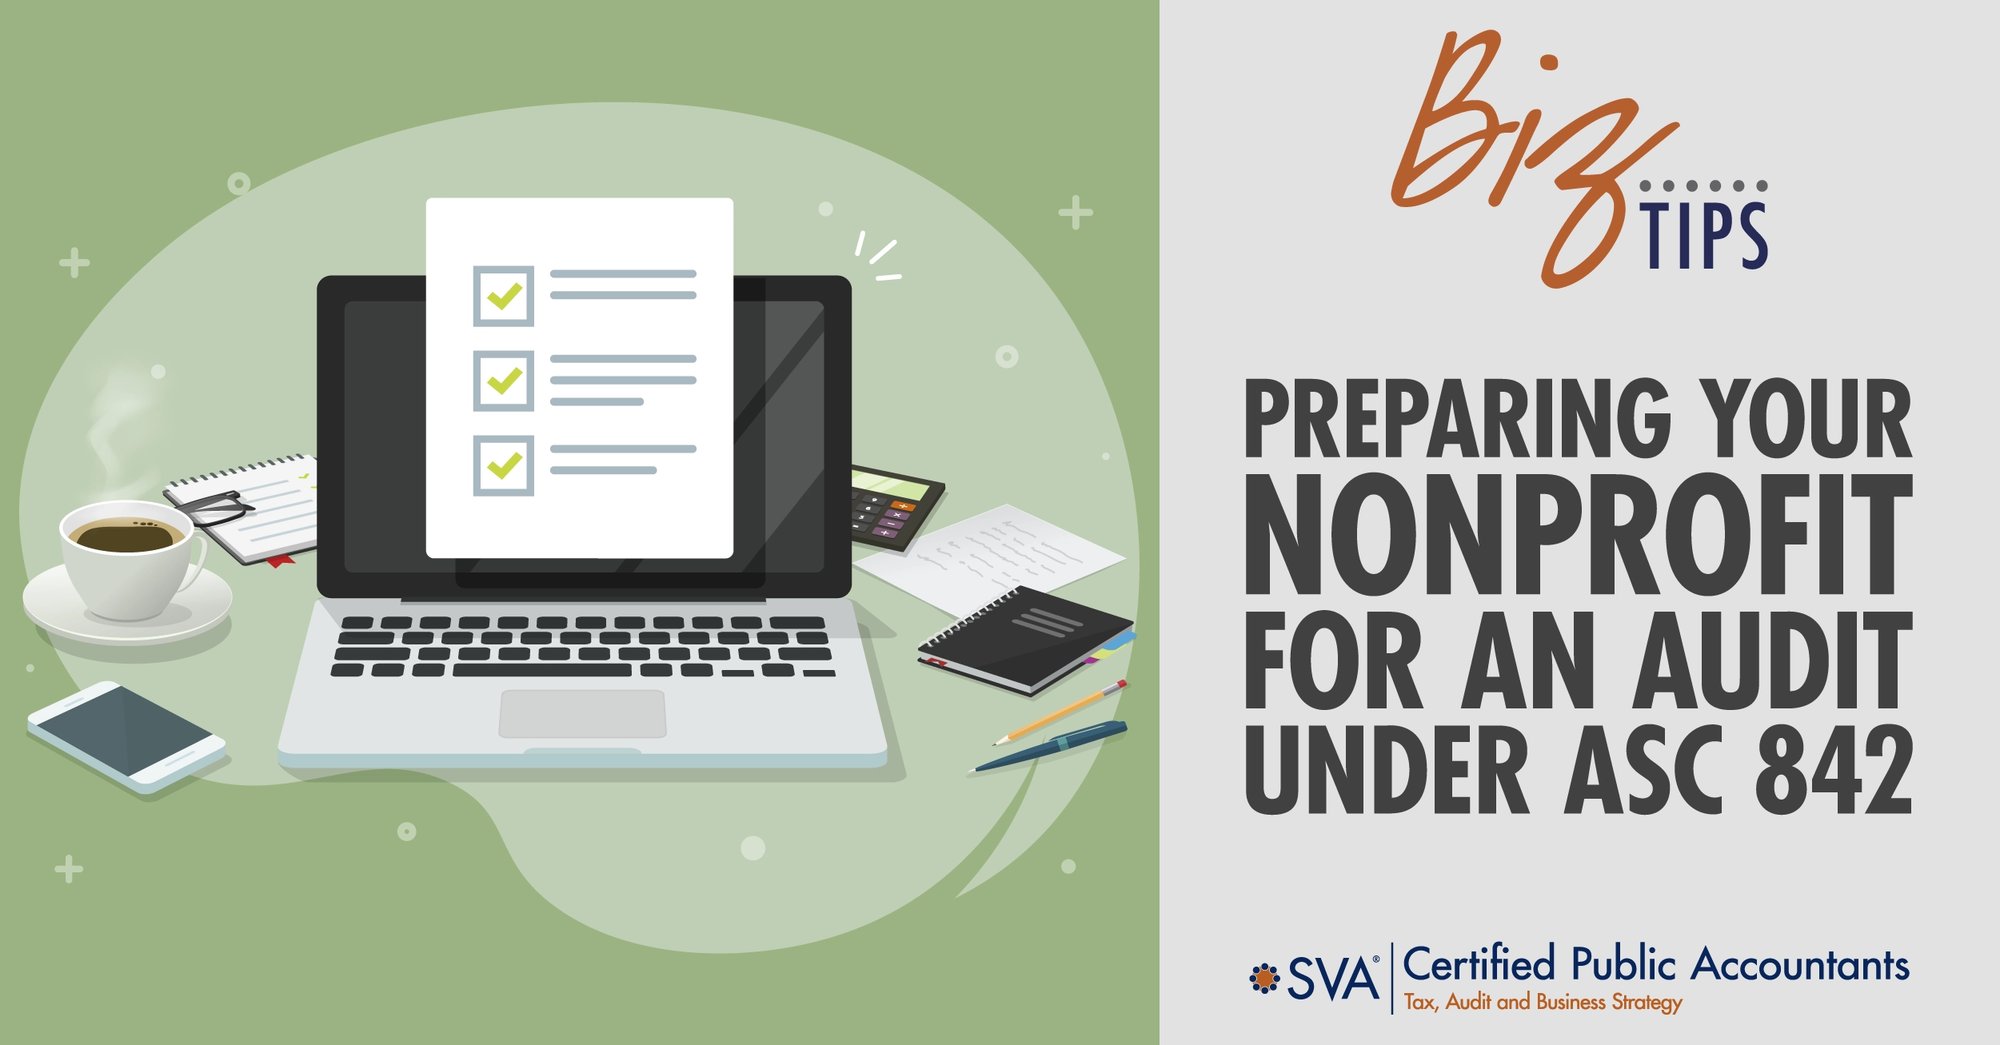 sva-certified-public-accountants-biz-tips-preparing-your-nonprofit-for-an-audit-under-asc-842-01